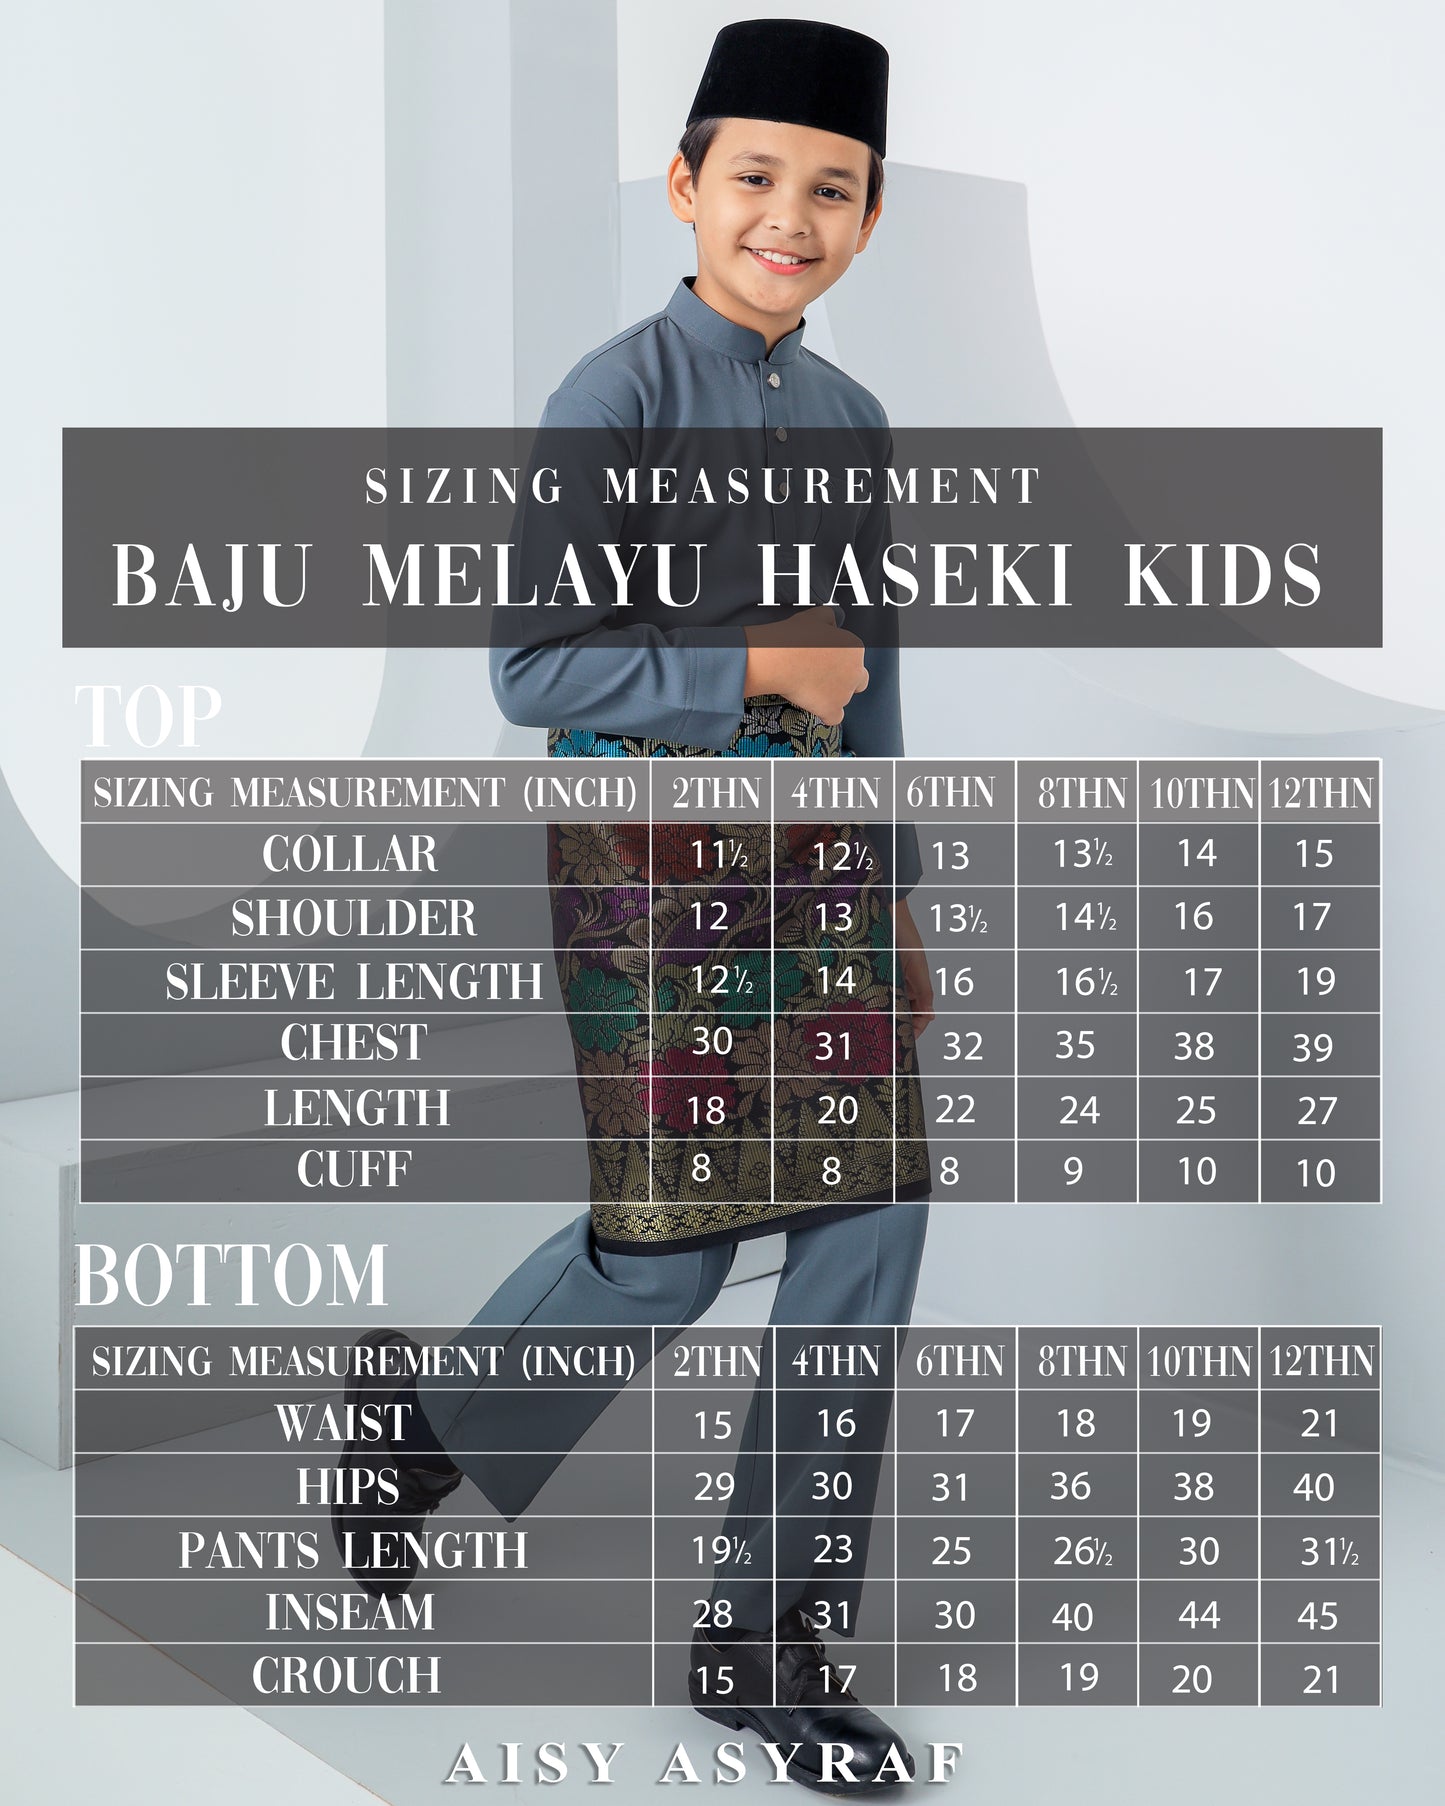 Baju Melayu Haseki Kids - Lilac